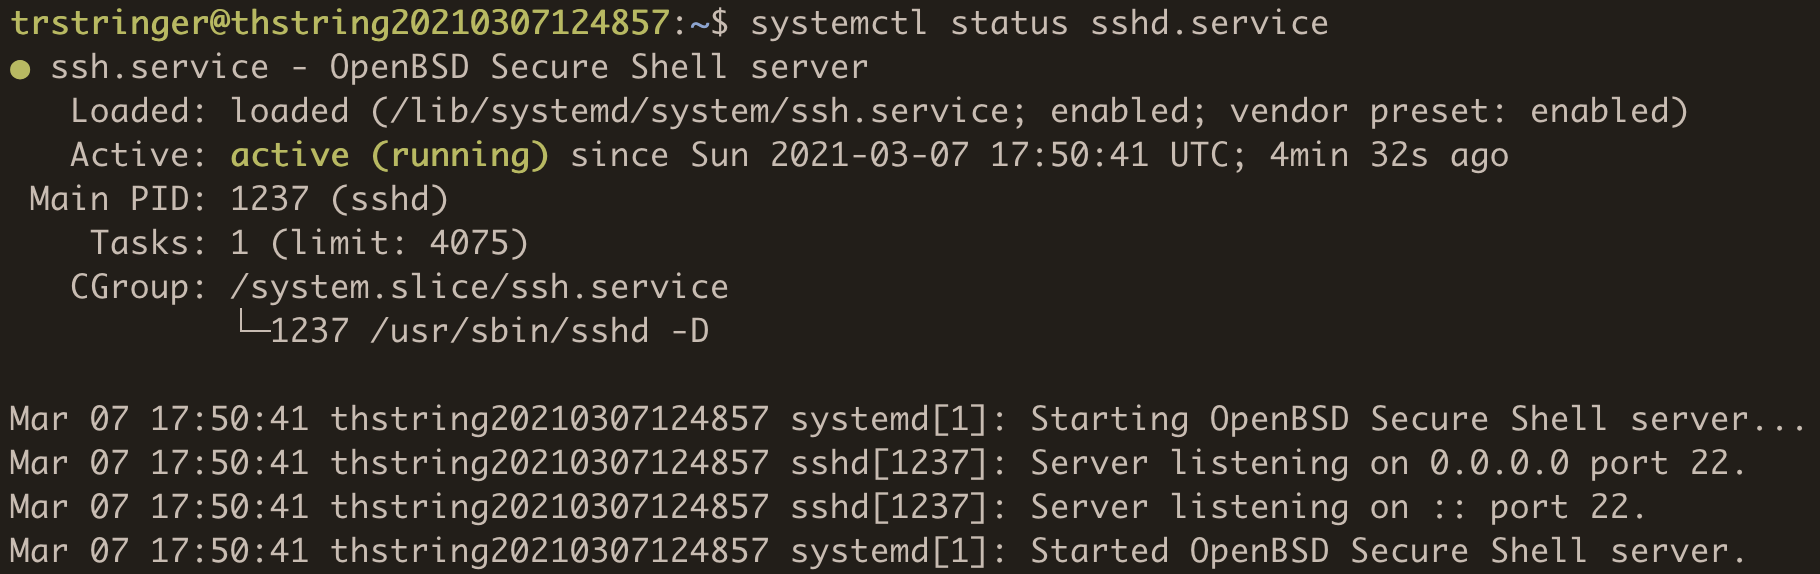 ssh.service status output